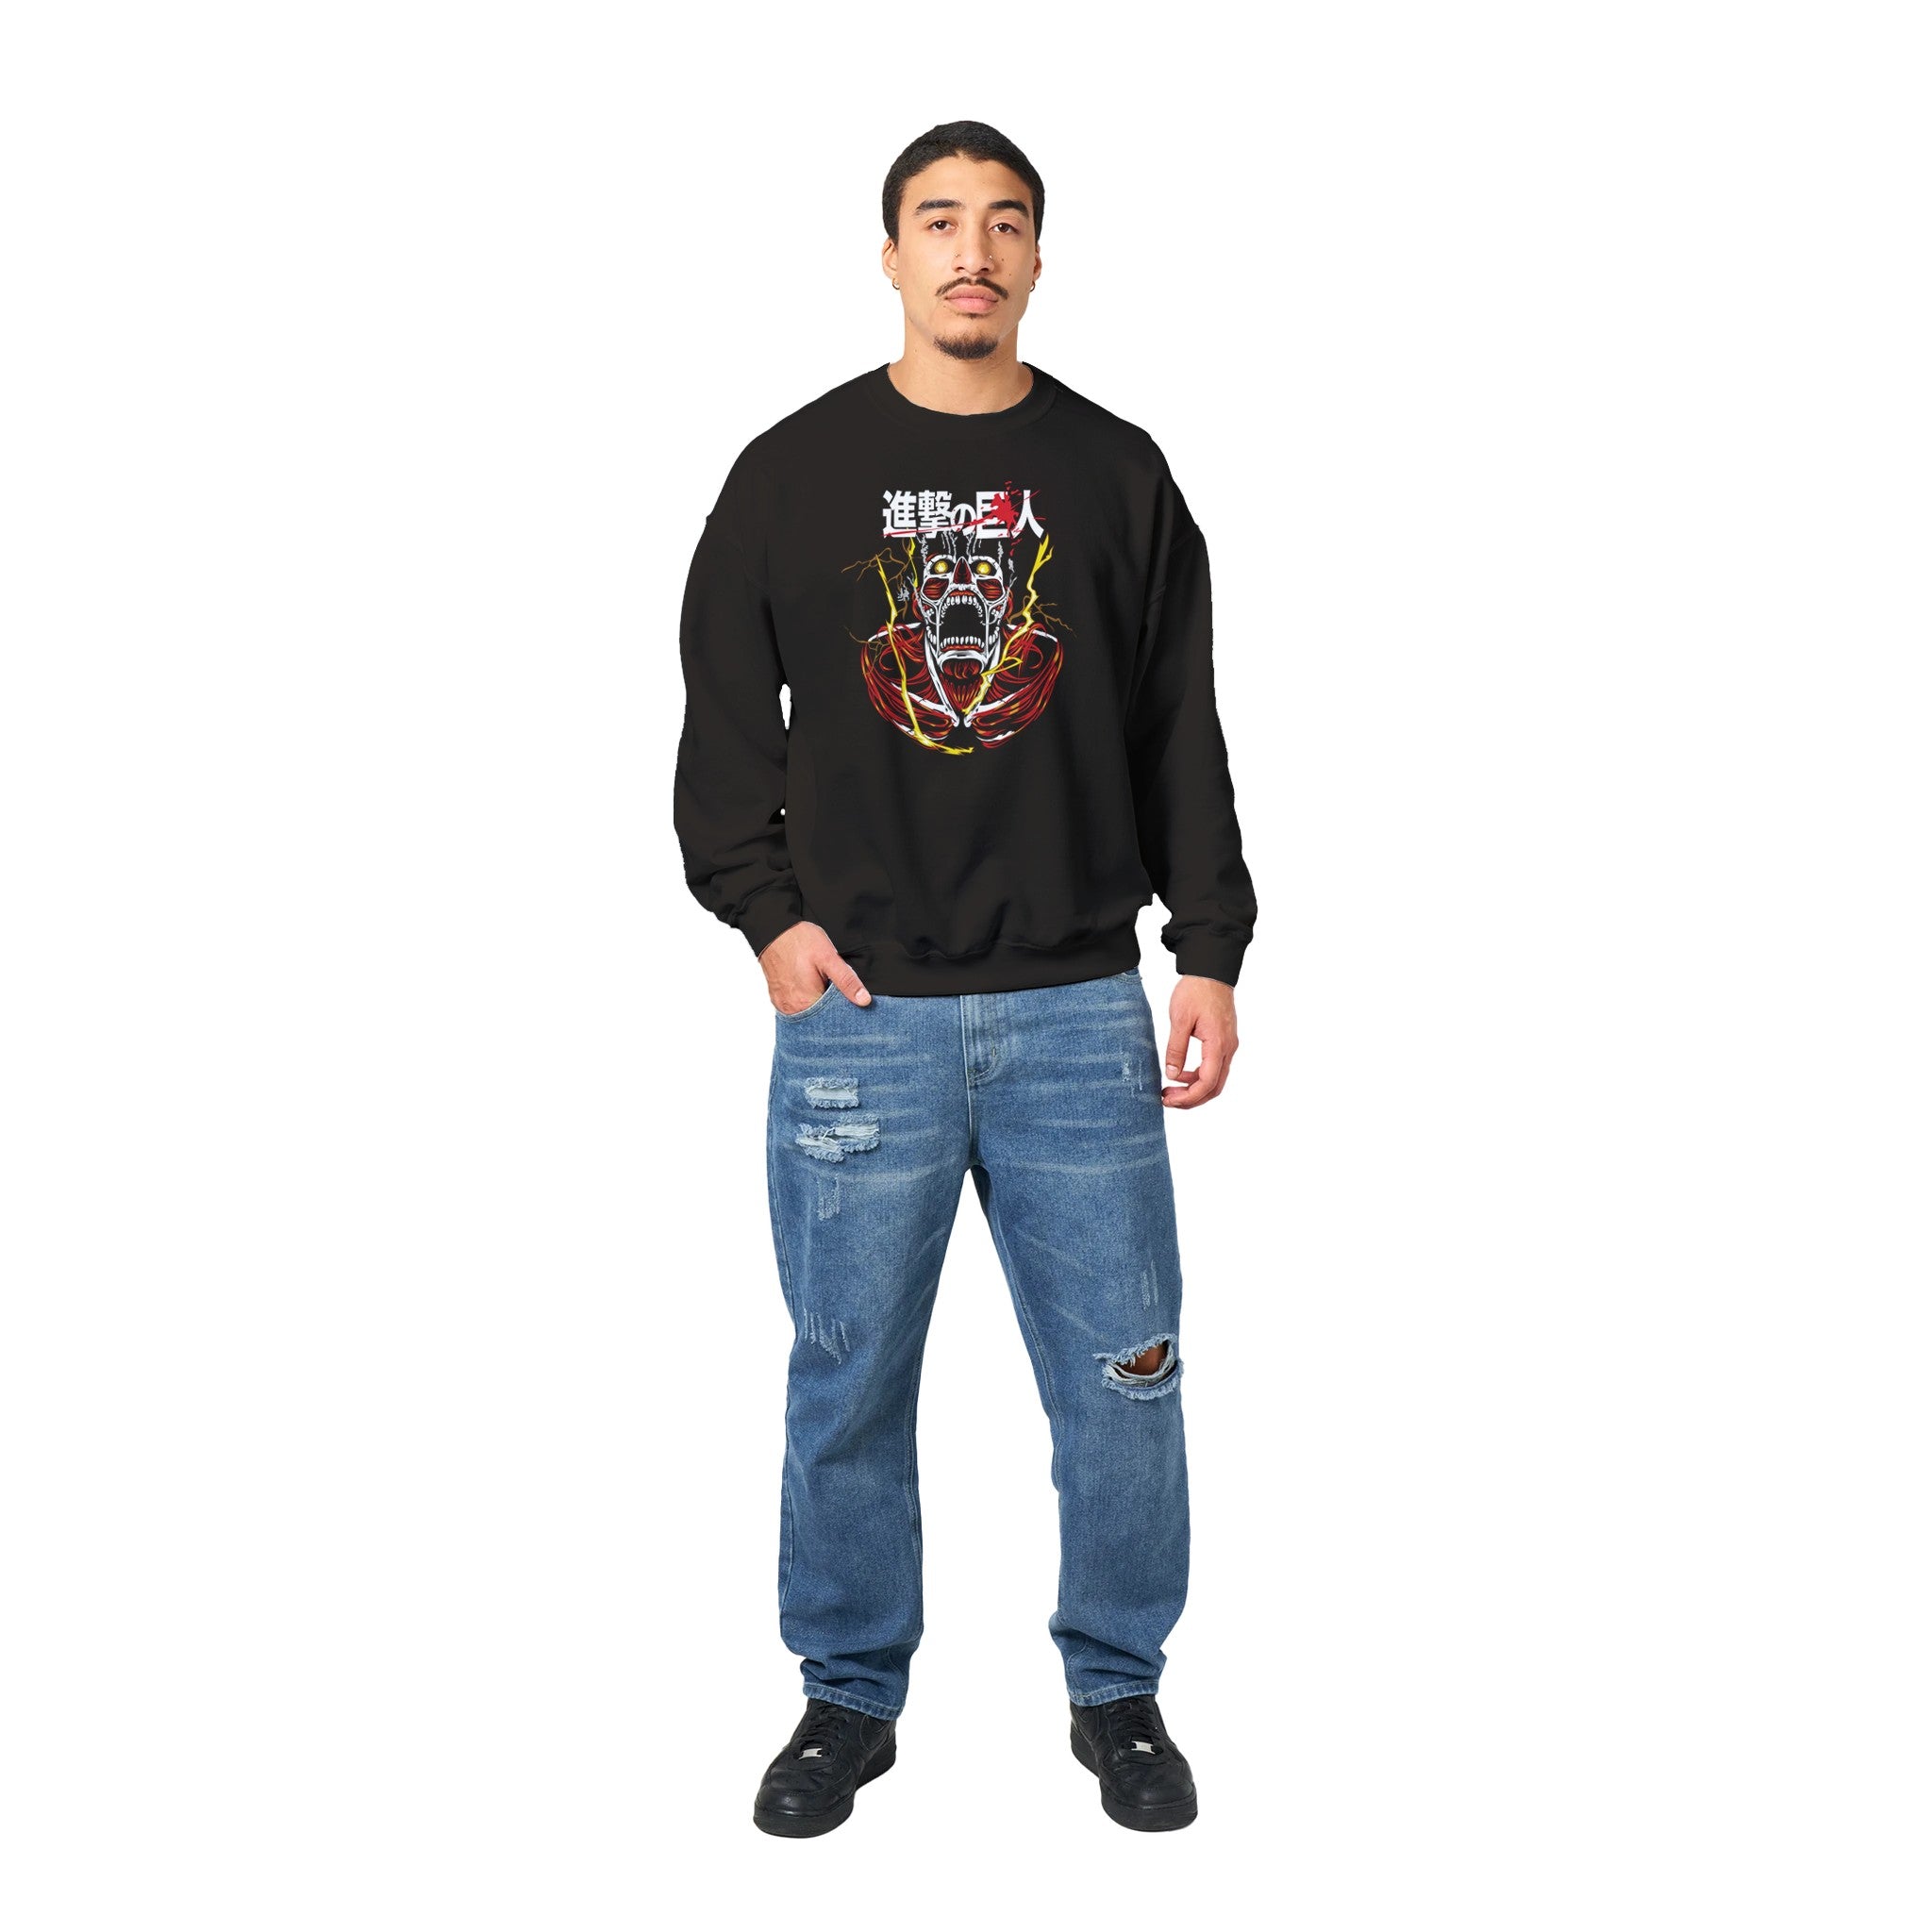 shop and buy attack on titan anime clothing colossal titan sweatshirt/jumper/longsleeve